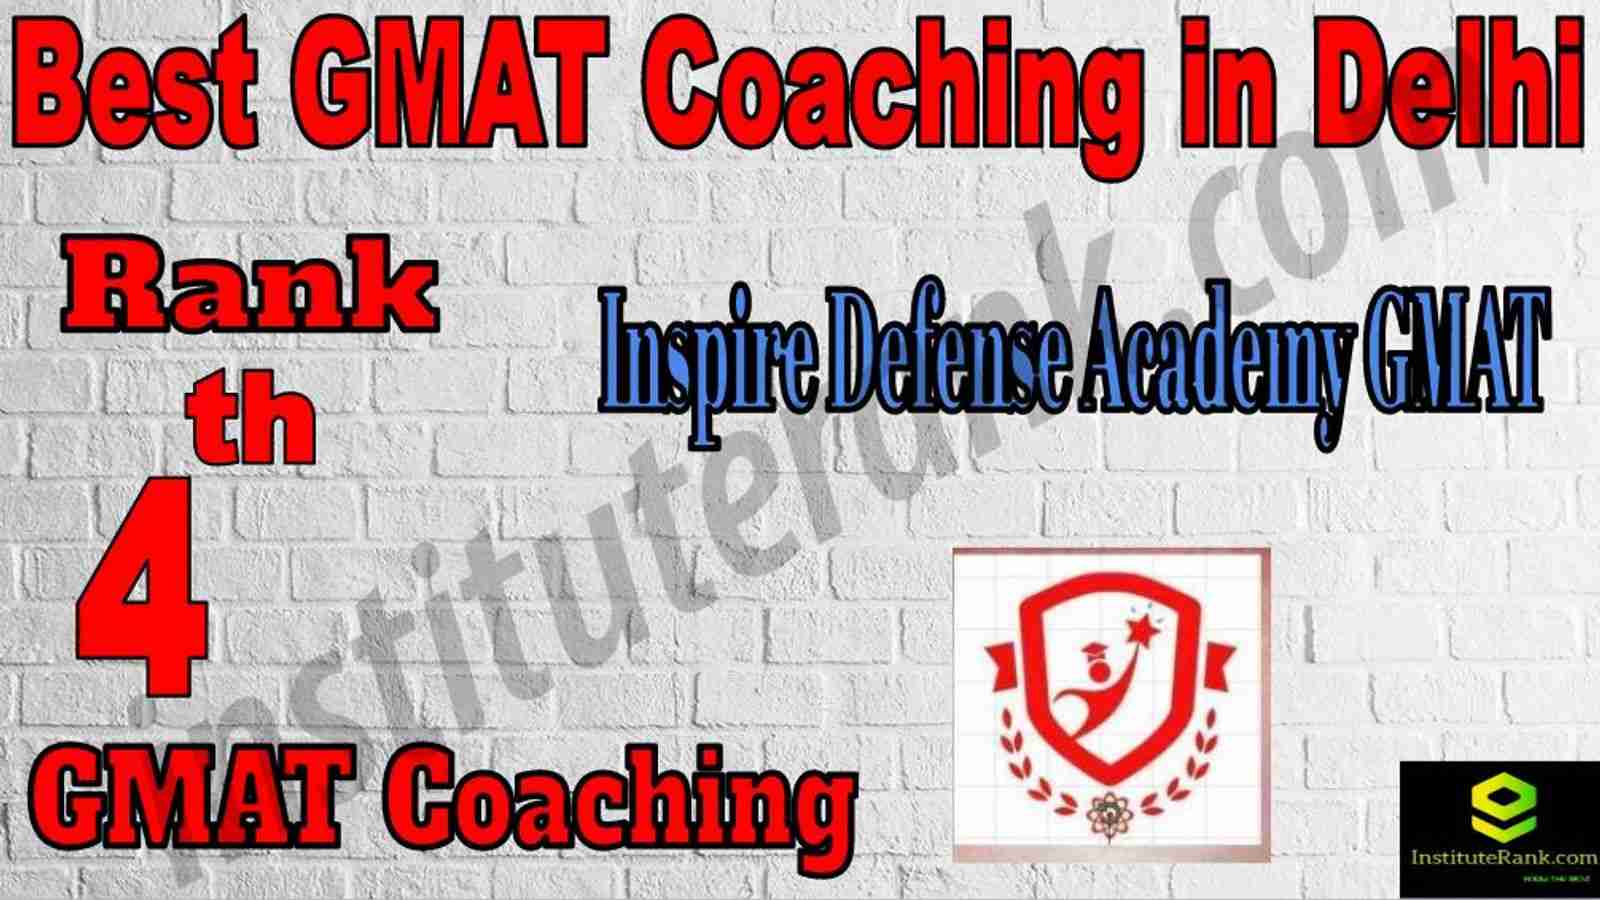 4th Best GMAT Coaching in Delhi